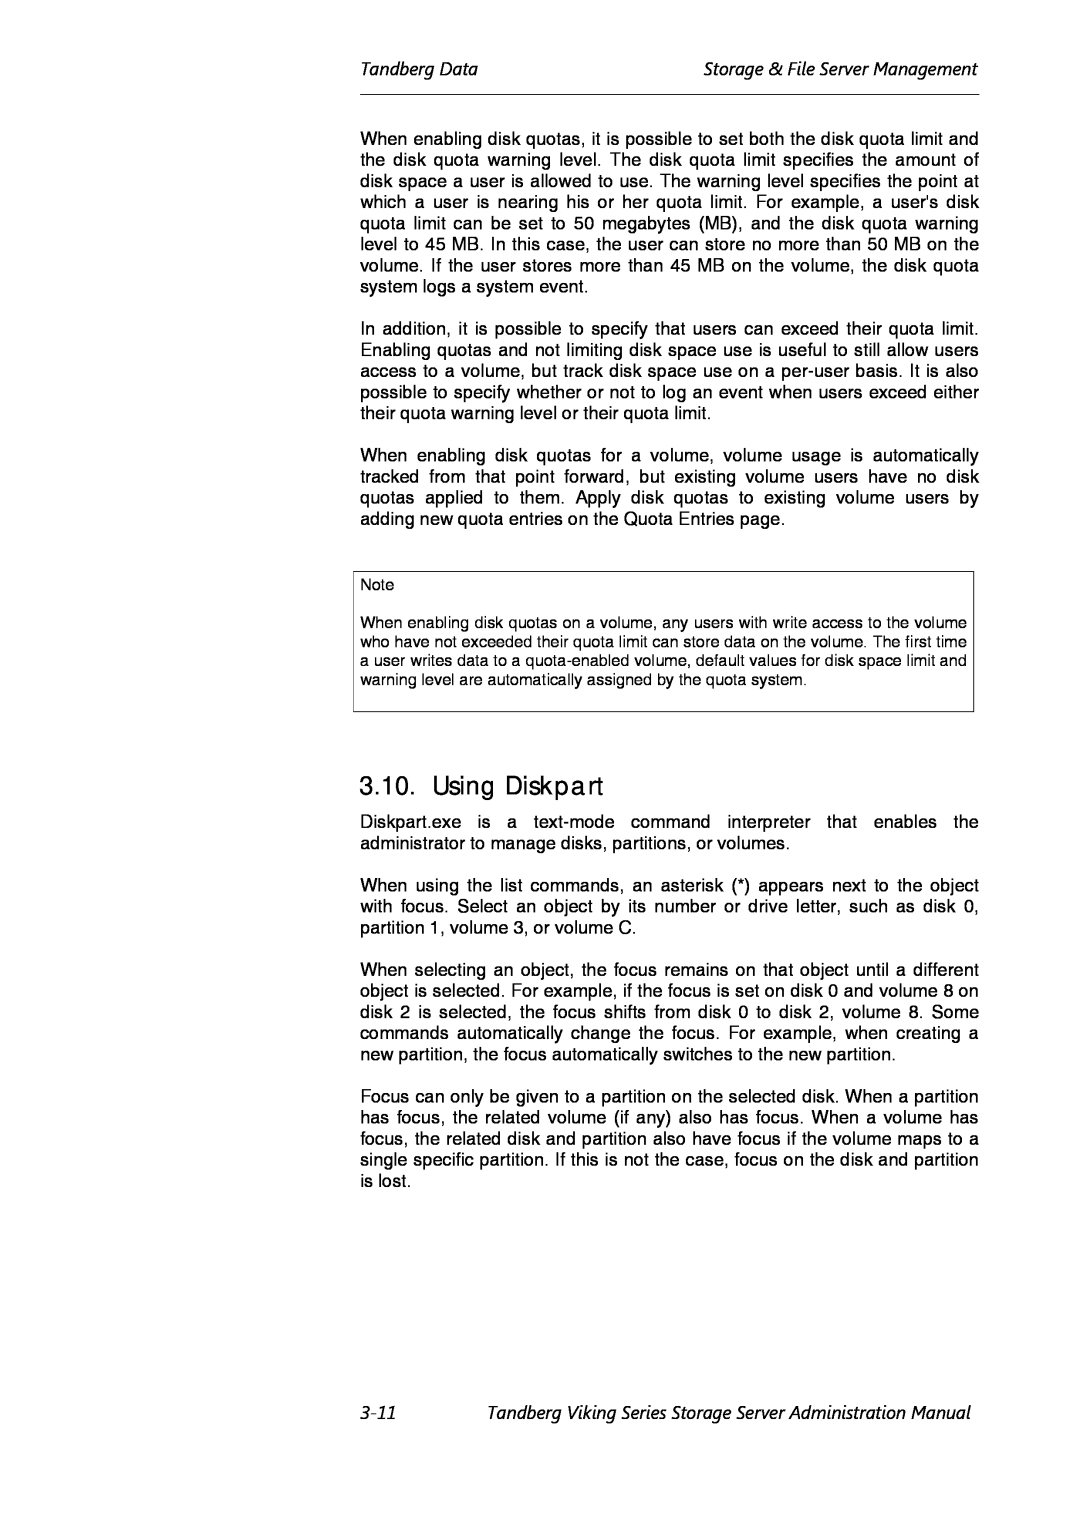 Tandberg Data Viking FS-1500, Viking FS-1600 manual Using Diskpart, Tandberg DataStorage & File Server Management, 3-11 